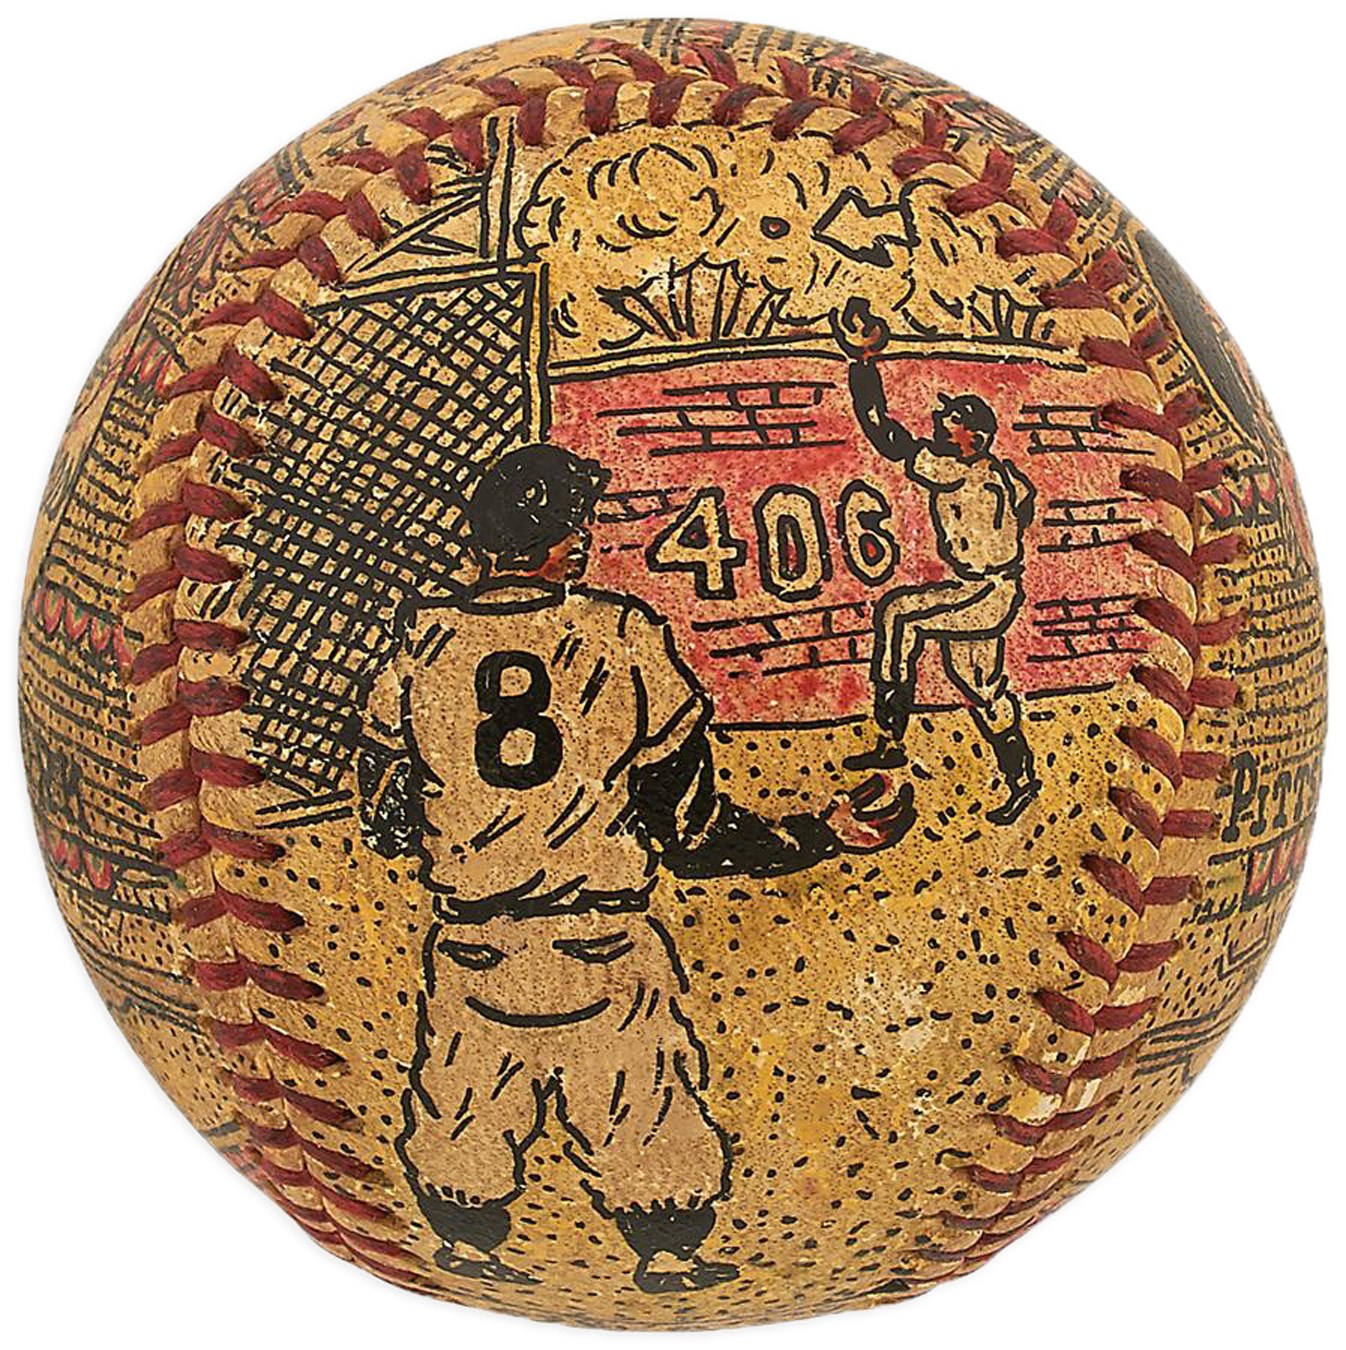 Sports Fine Art - 1960 World Series Folk Art Painted Baseball by George Sosnak